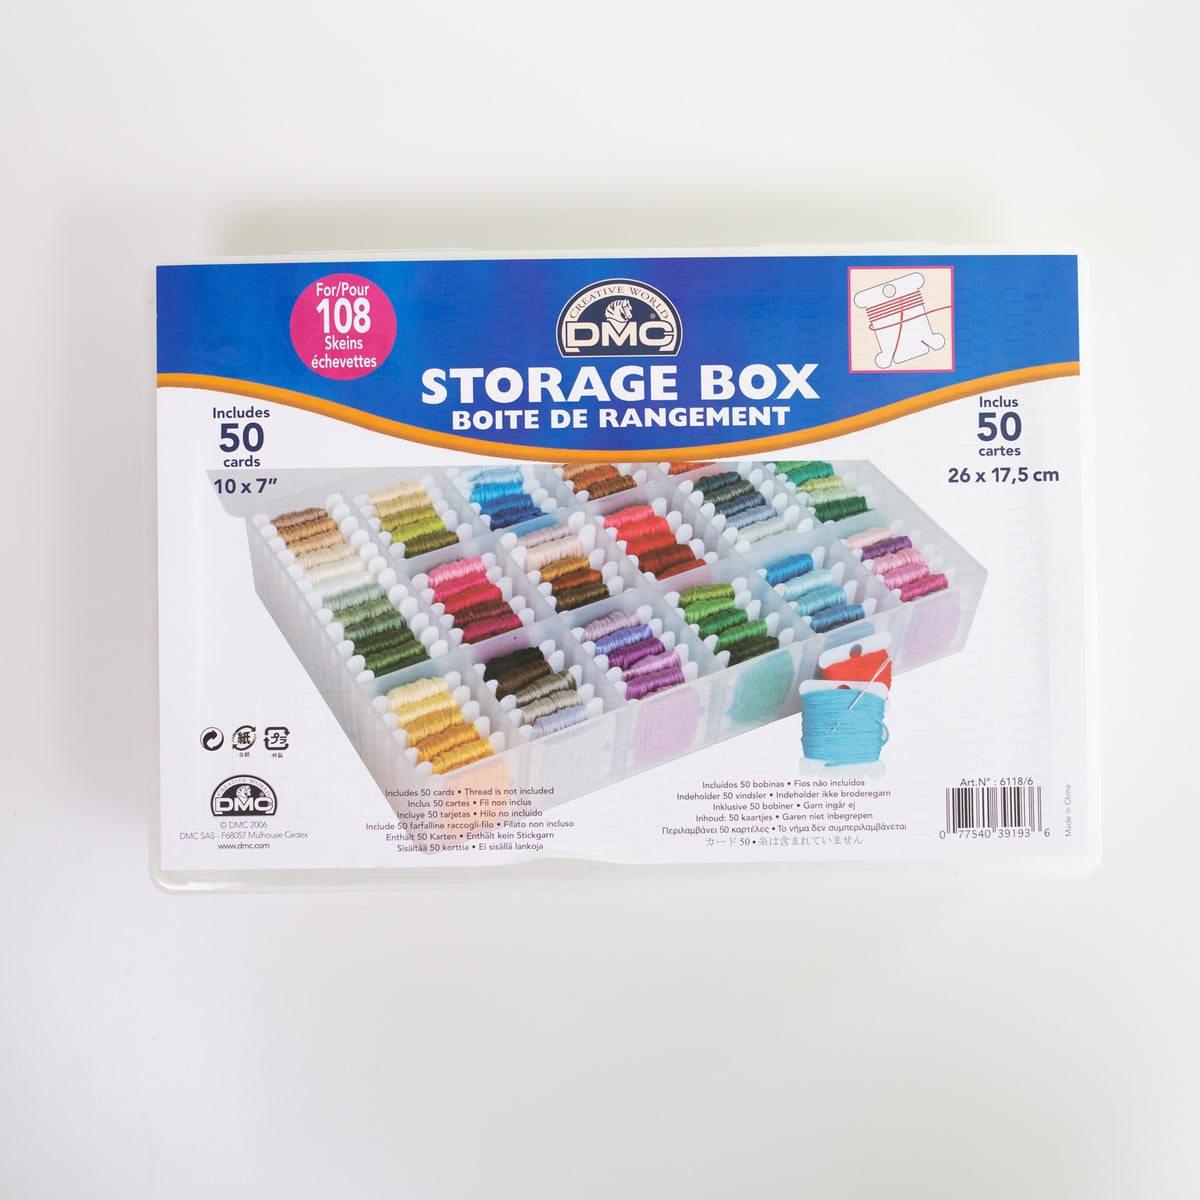 DMC storage box